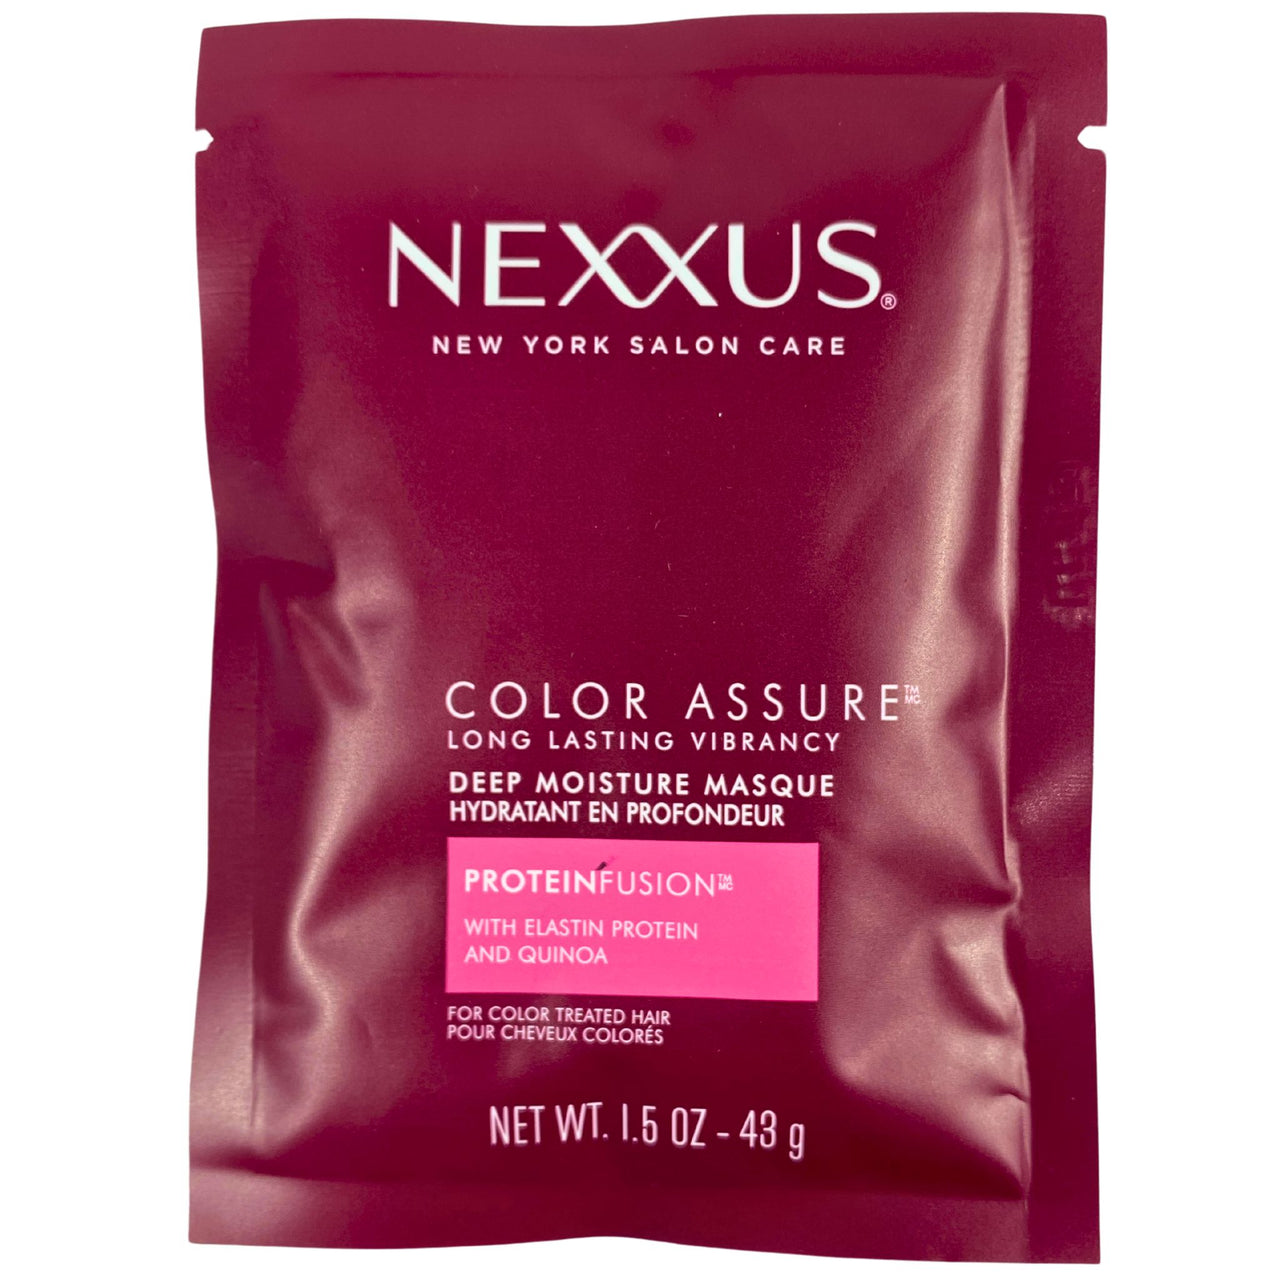 NEXXUS New York Salon Care Color